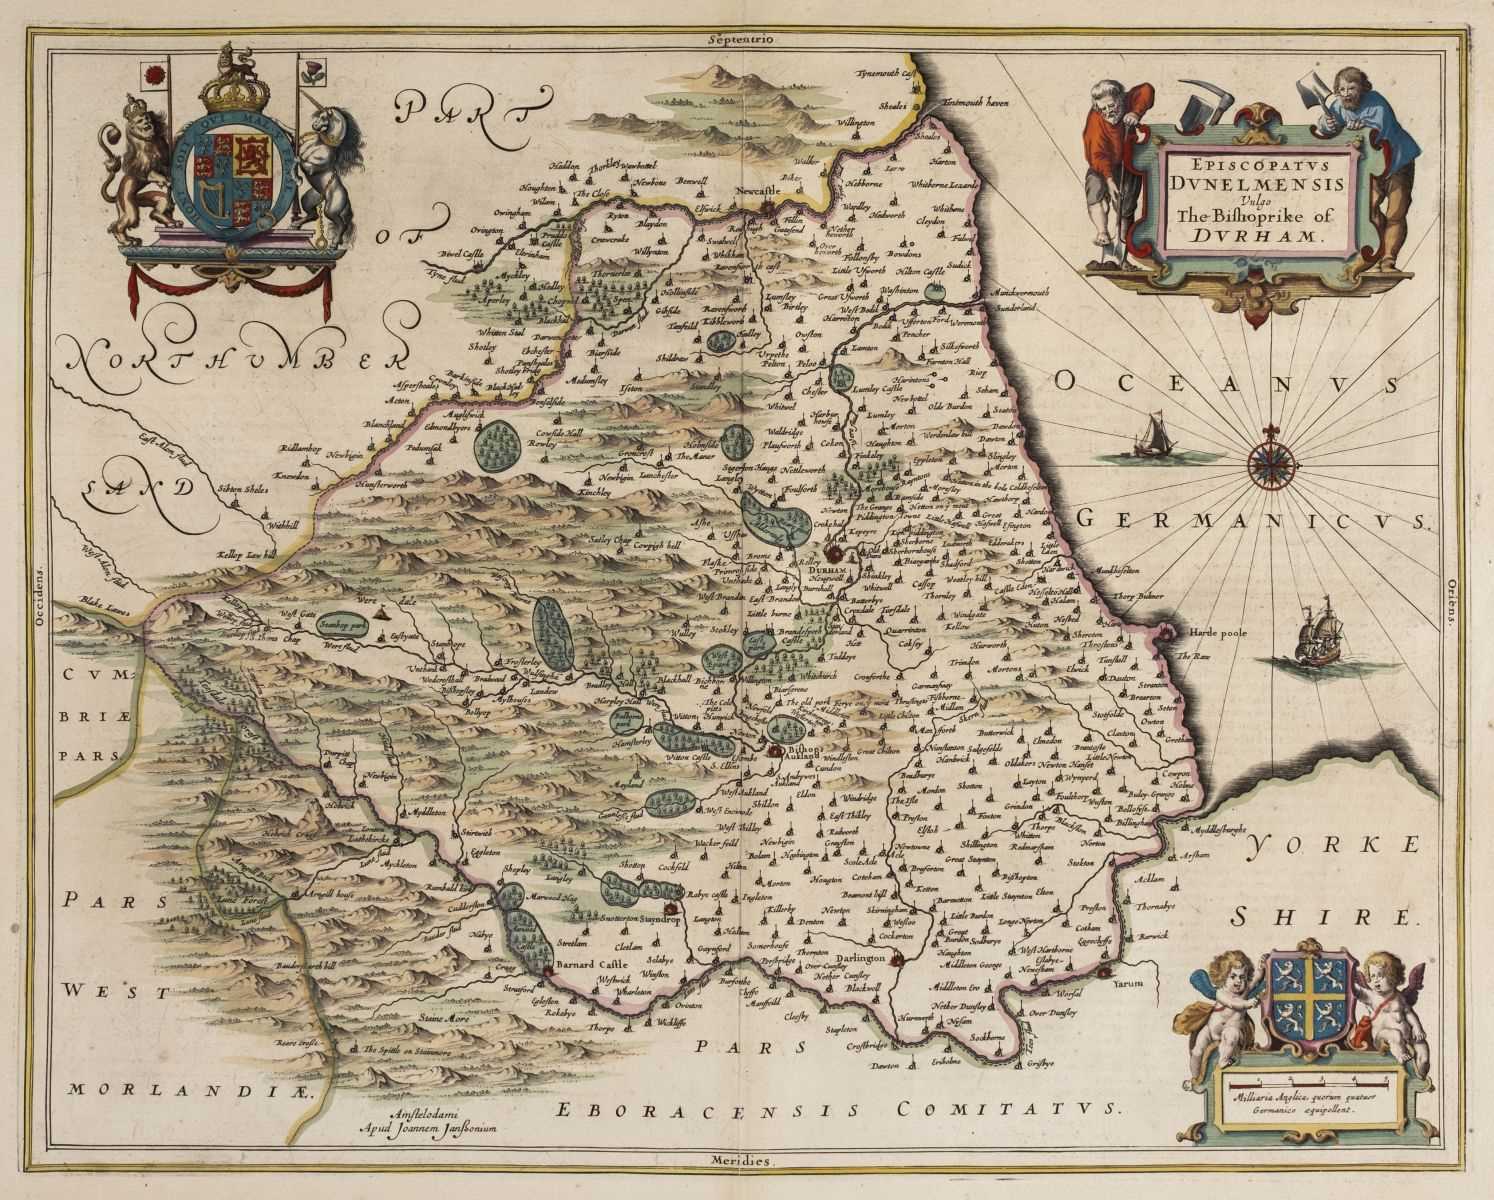 Lot 31 - Durham. Jansson (Jan), Episcopatus Dunelmensis vulgo The Bishoprike of Durham, Amsterdam, circa 1650